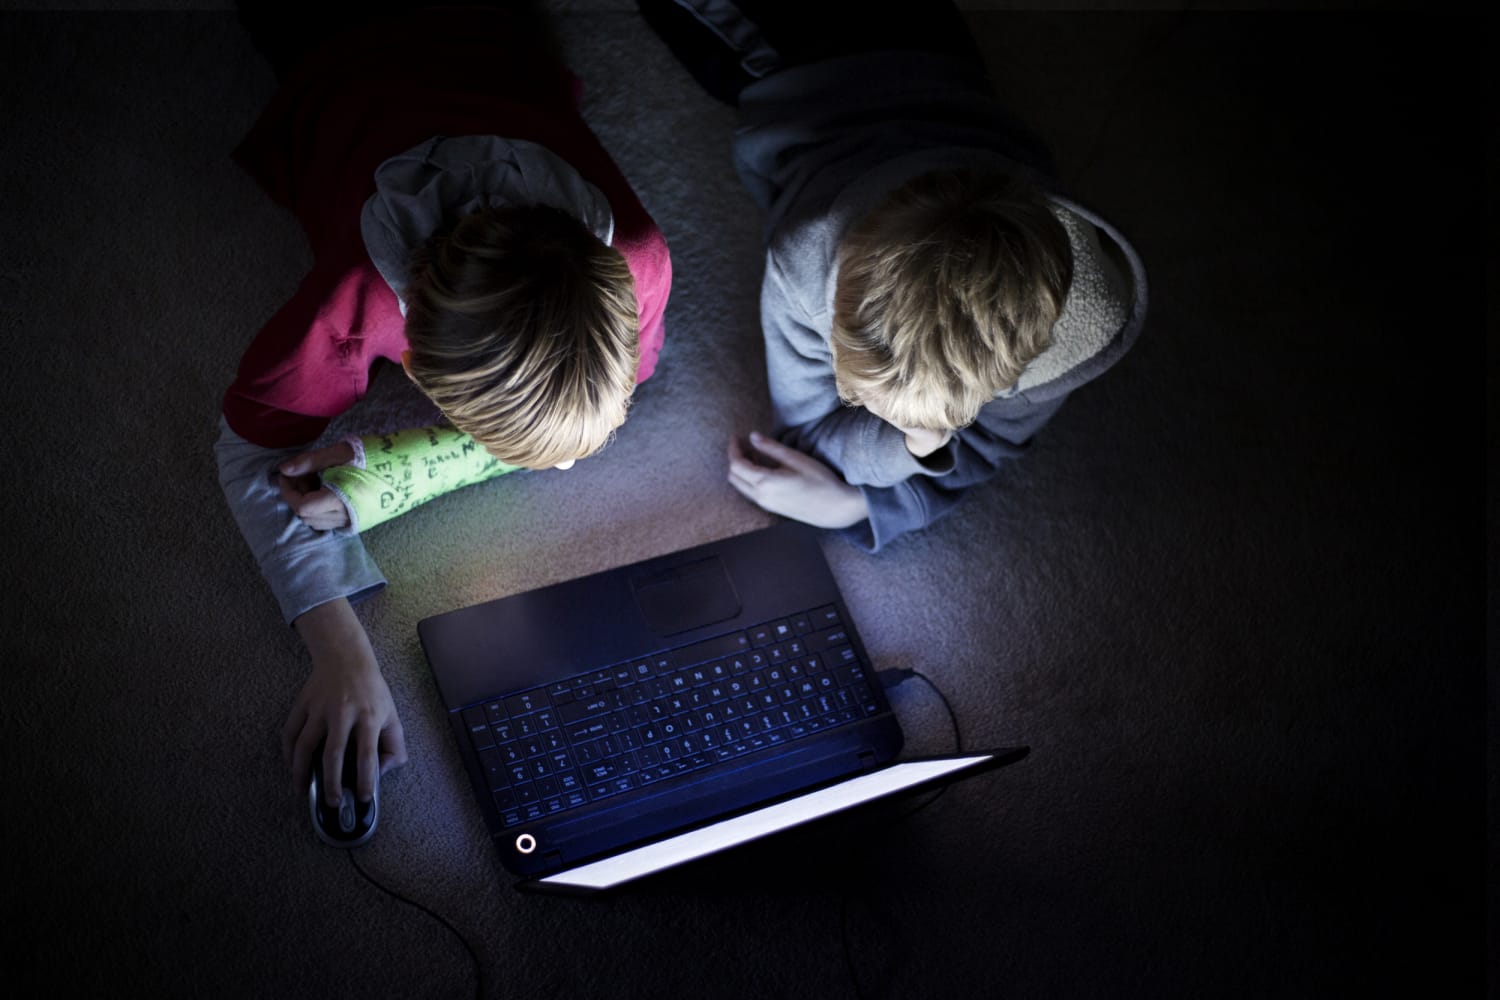 Microsoft Launches Tool To Identify Child Sexual Predators In